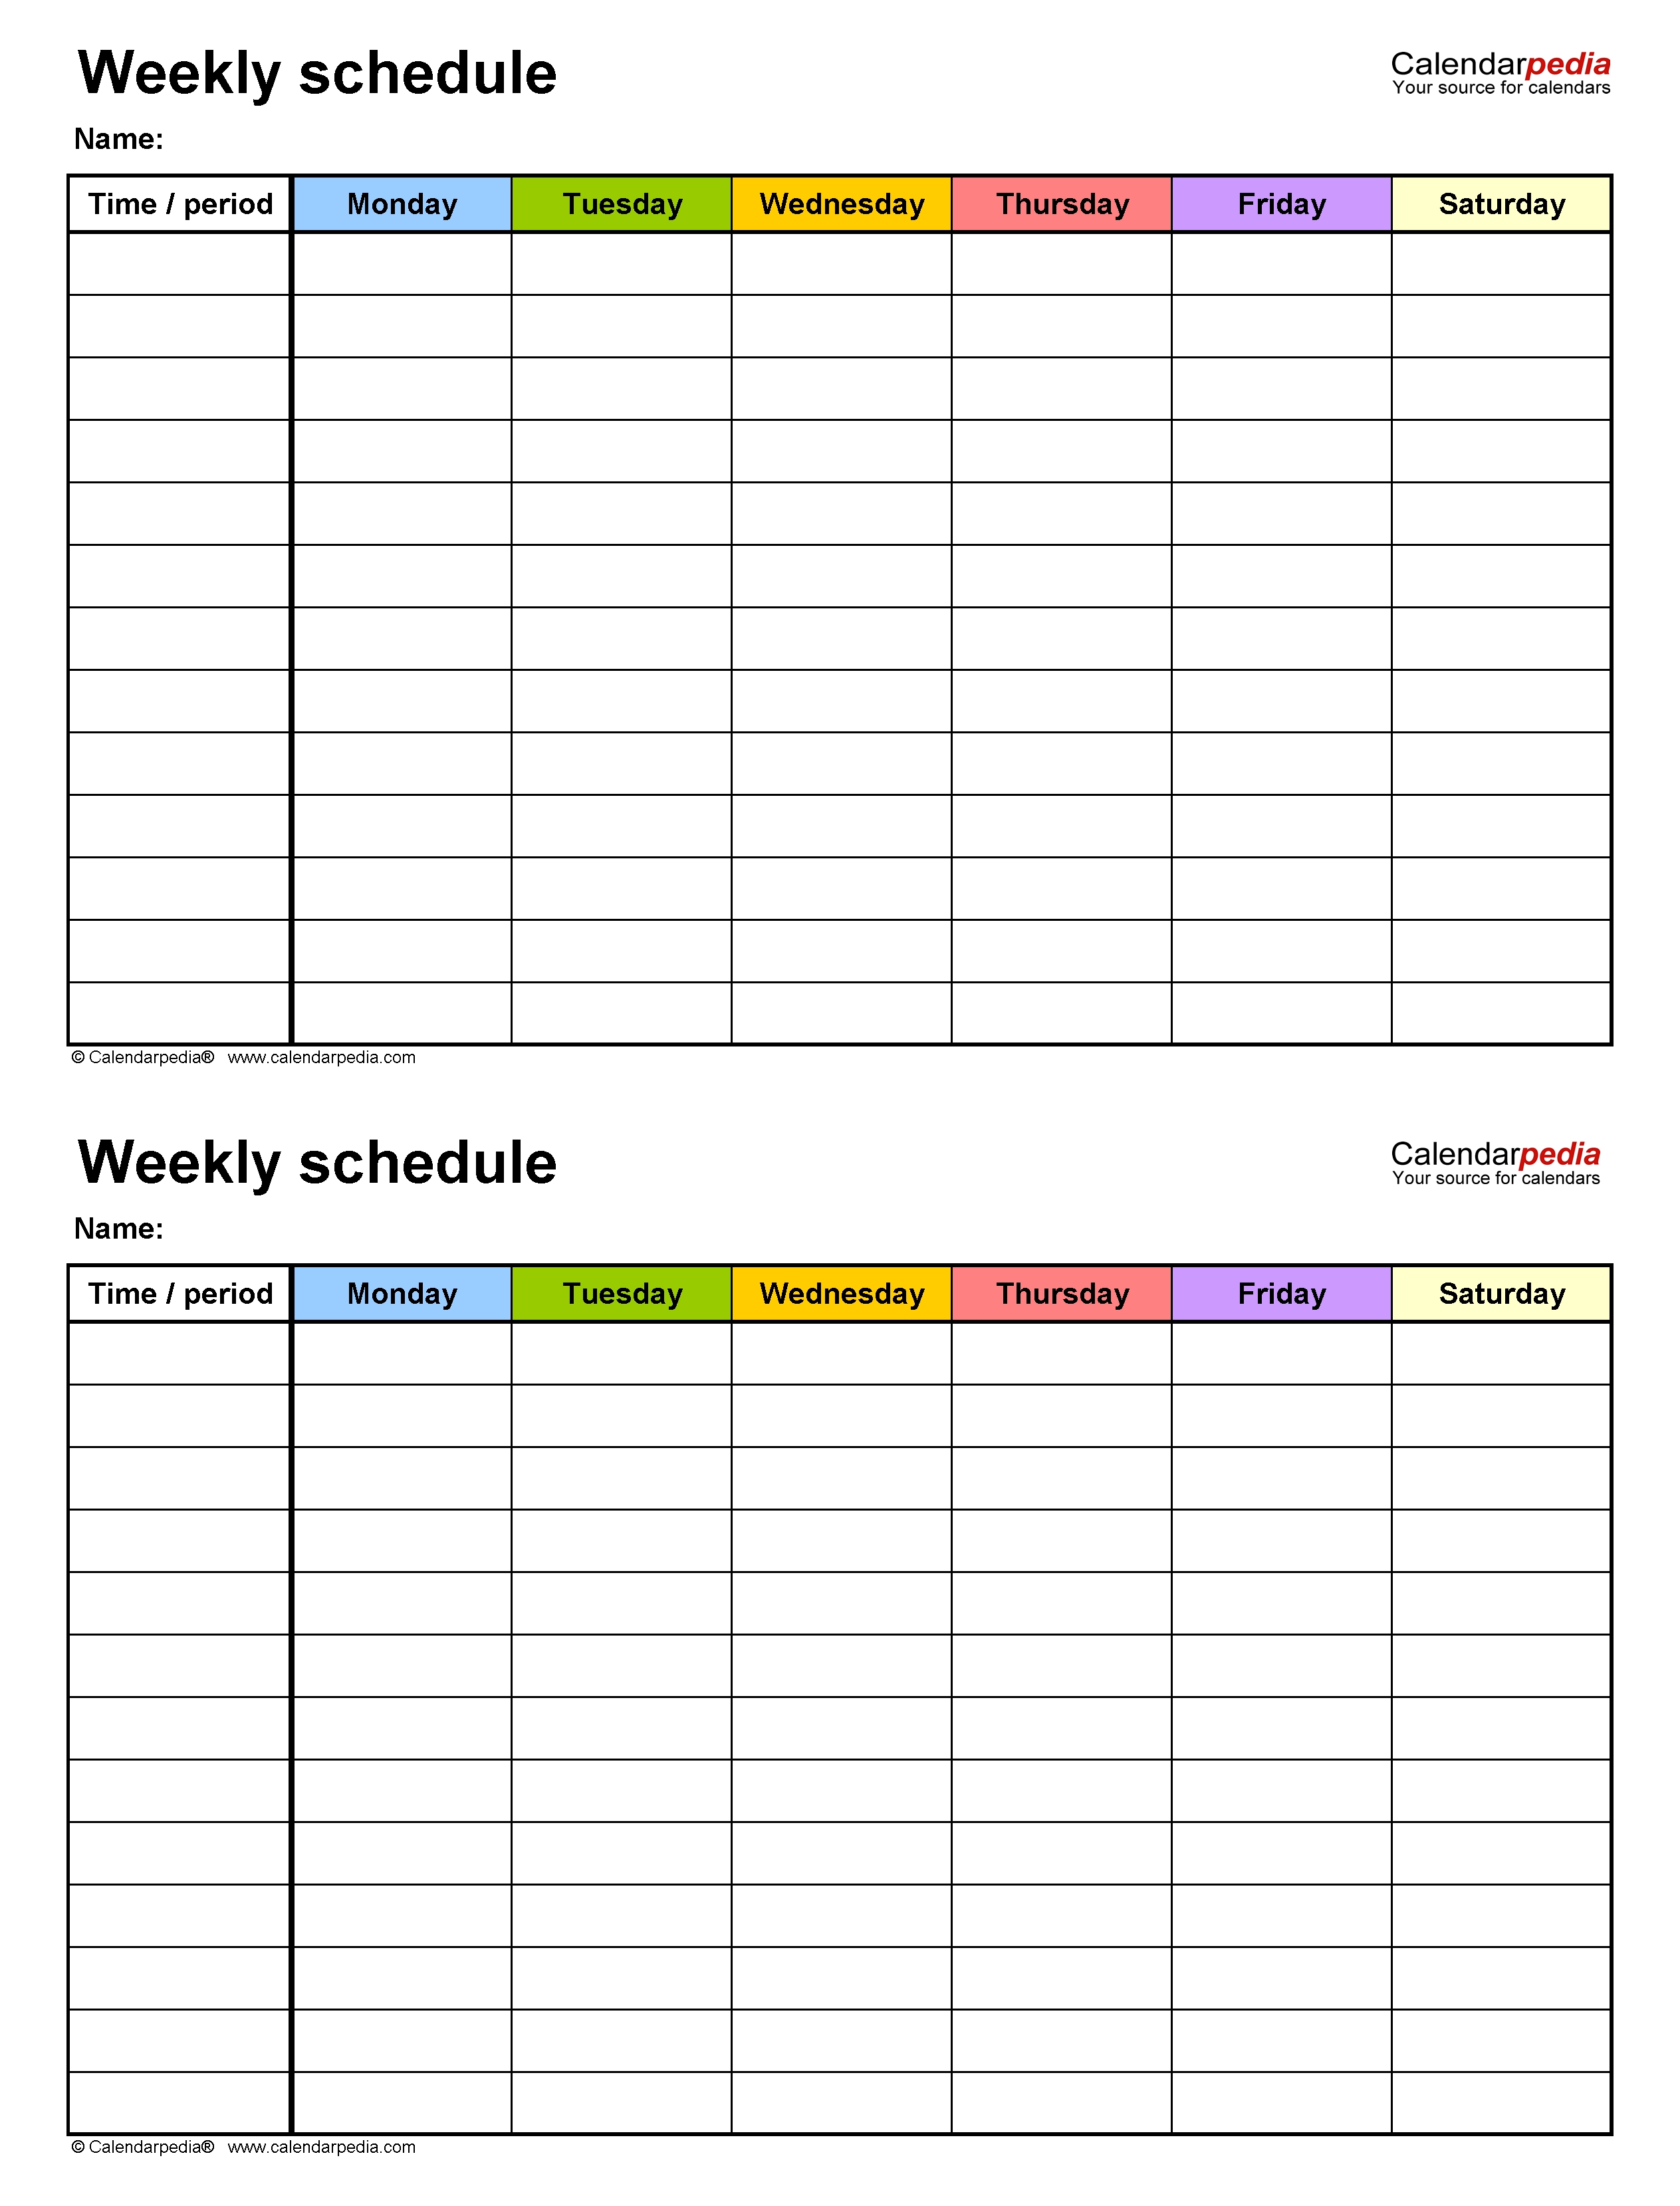 work schedule mount template excel free